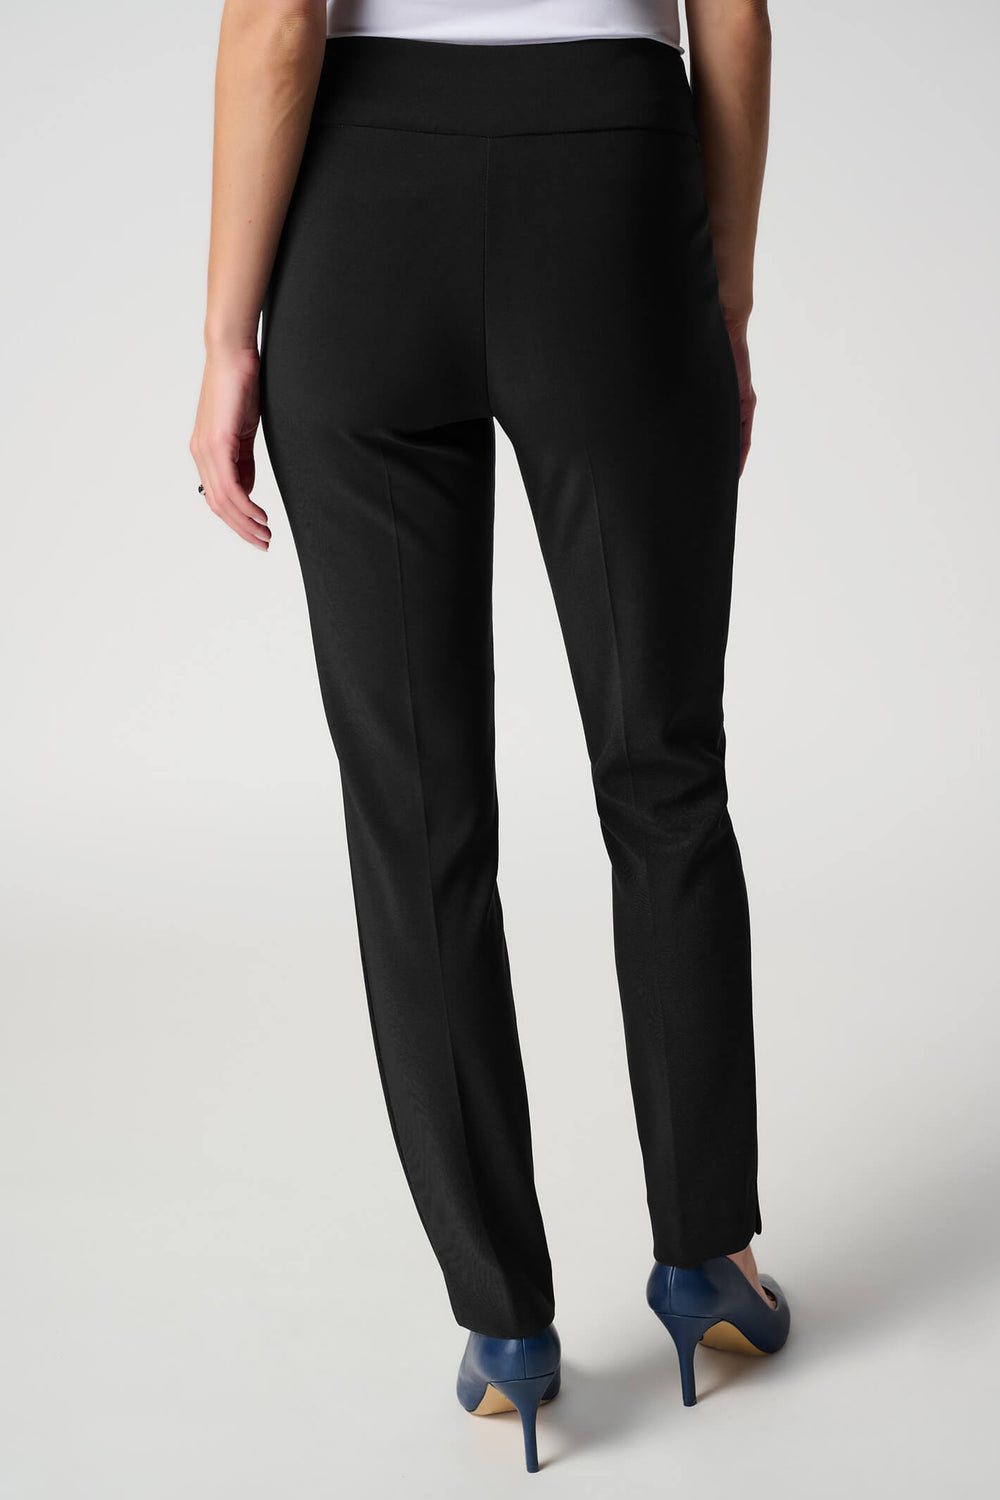 Joseph Ribkoff 144092 Black Classic Tailored Slim Fit Trousers - Dotique